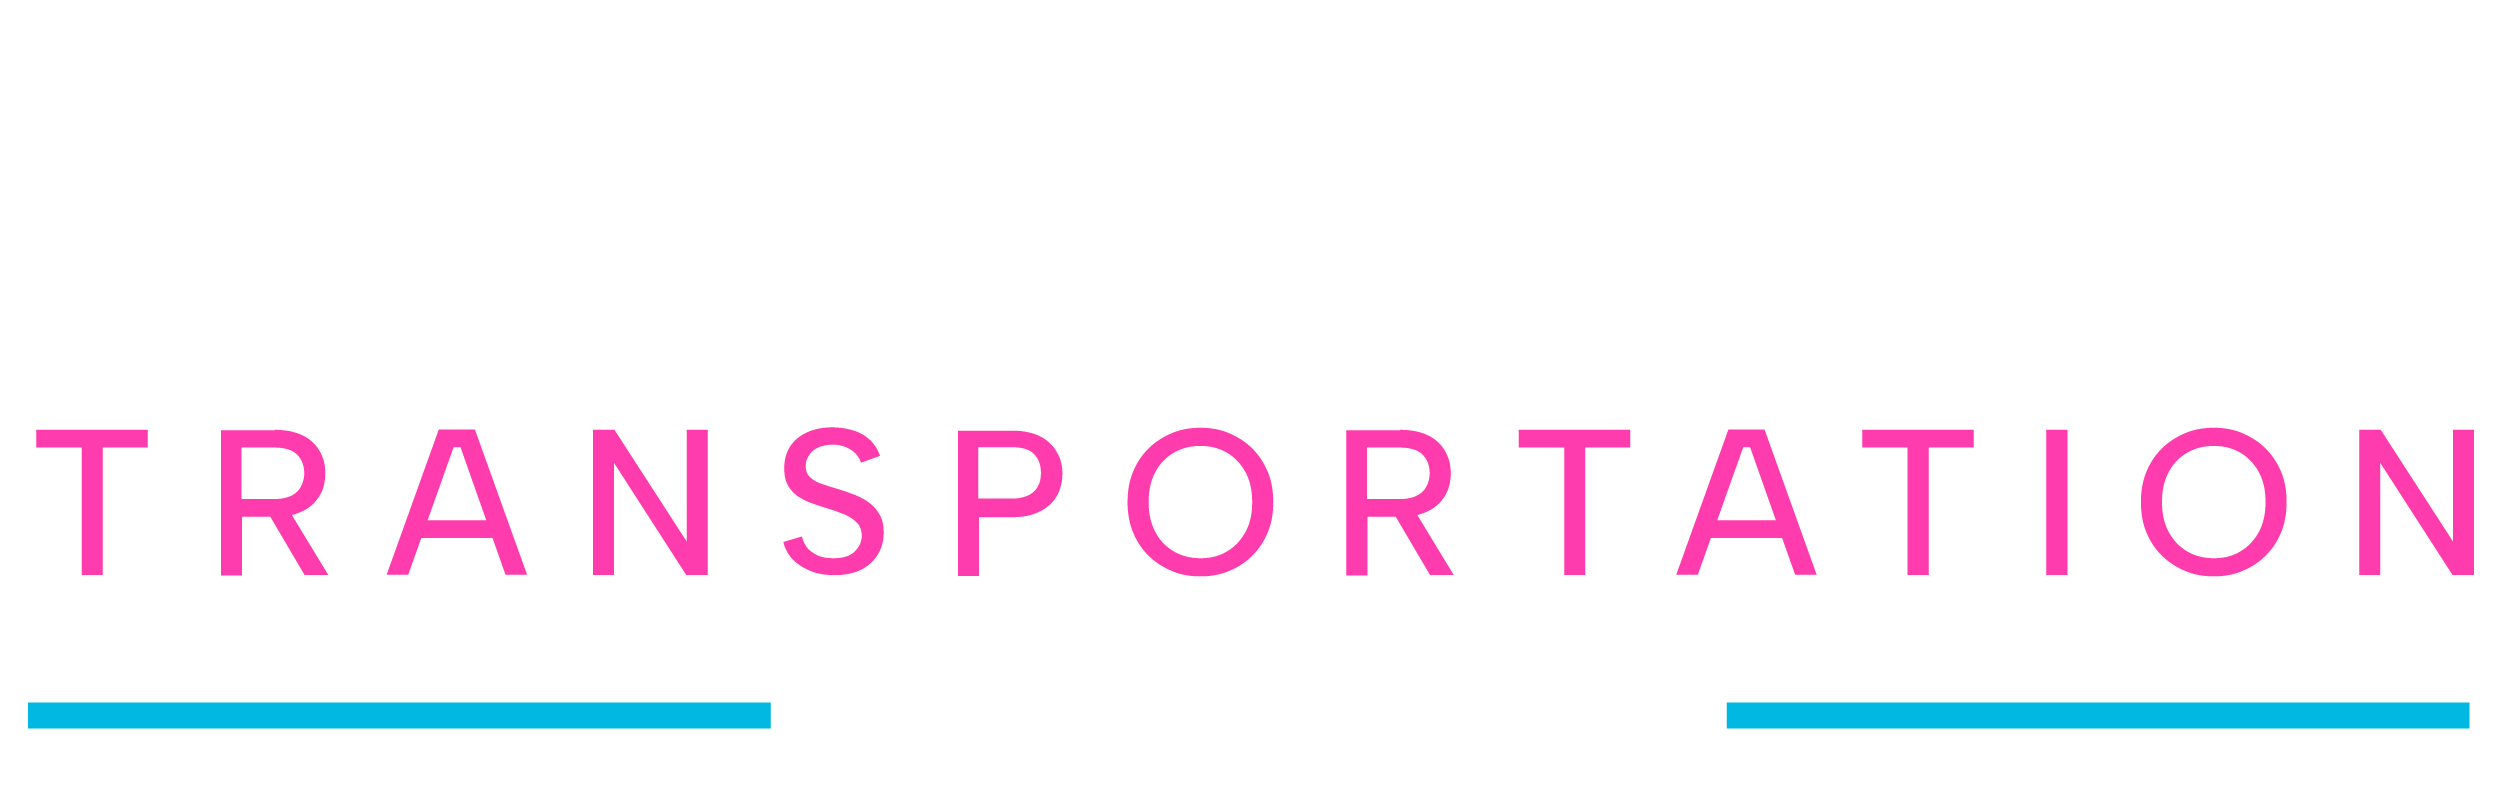 Top Notch Transportation Miami